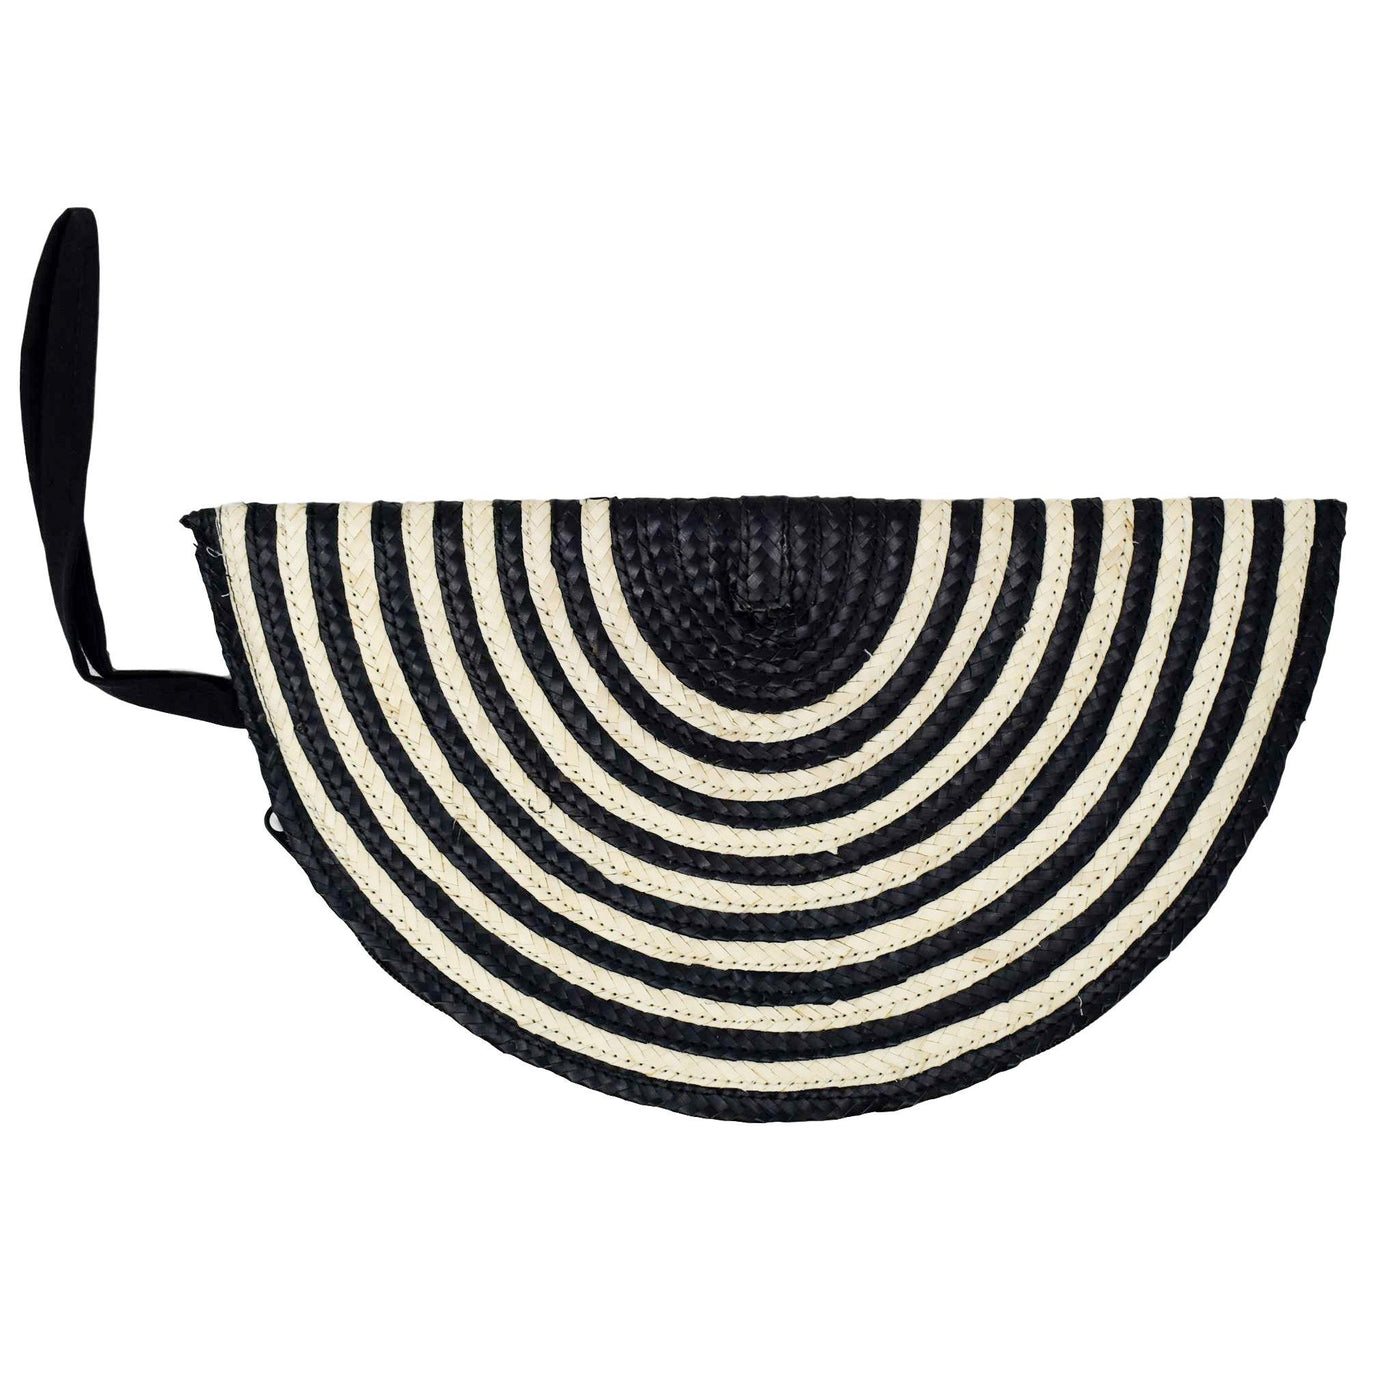 HALFMOON CLUTCH - Black Stripe by POPPY + SAGE